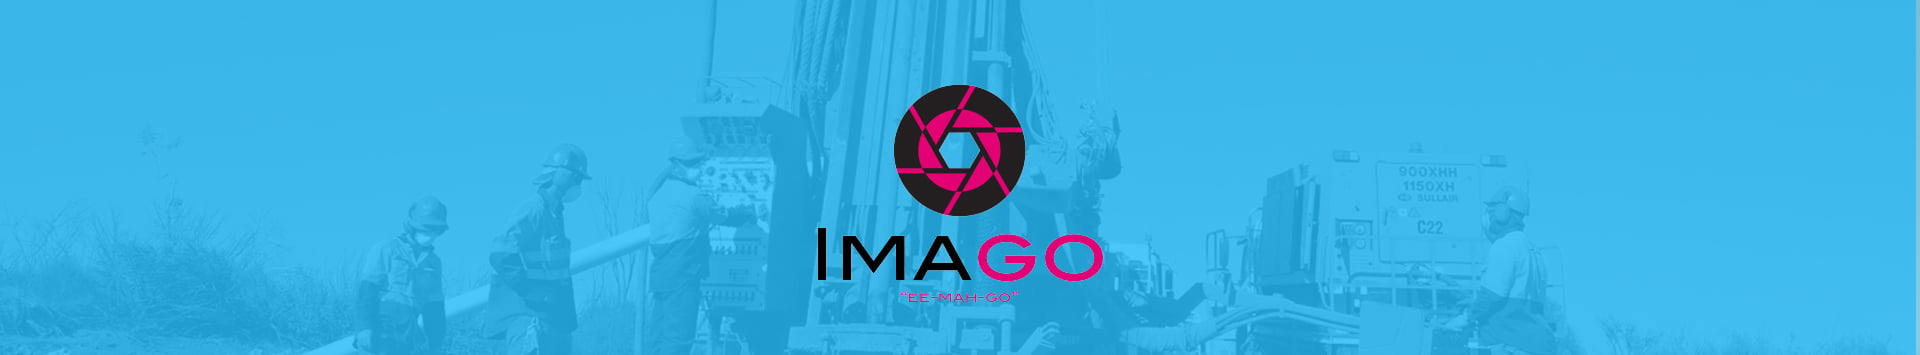 imago-fullwidth-banner